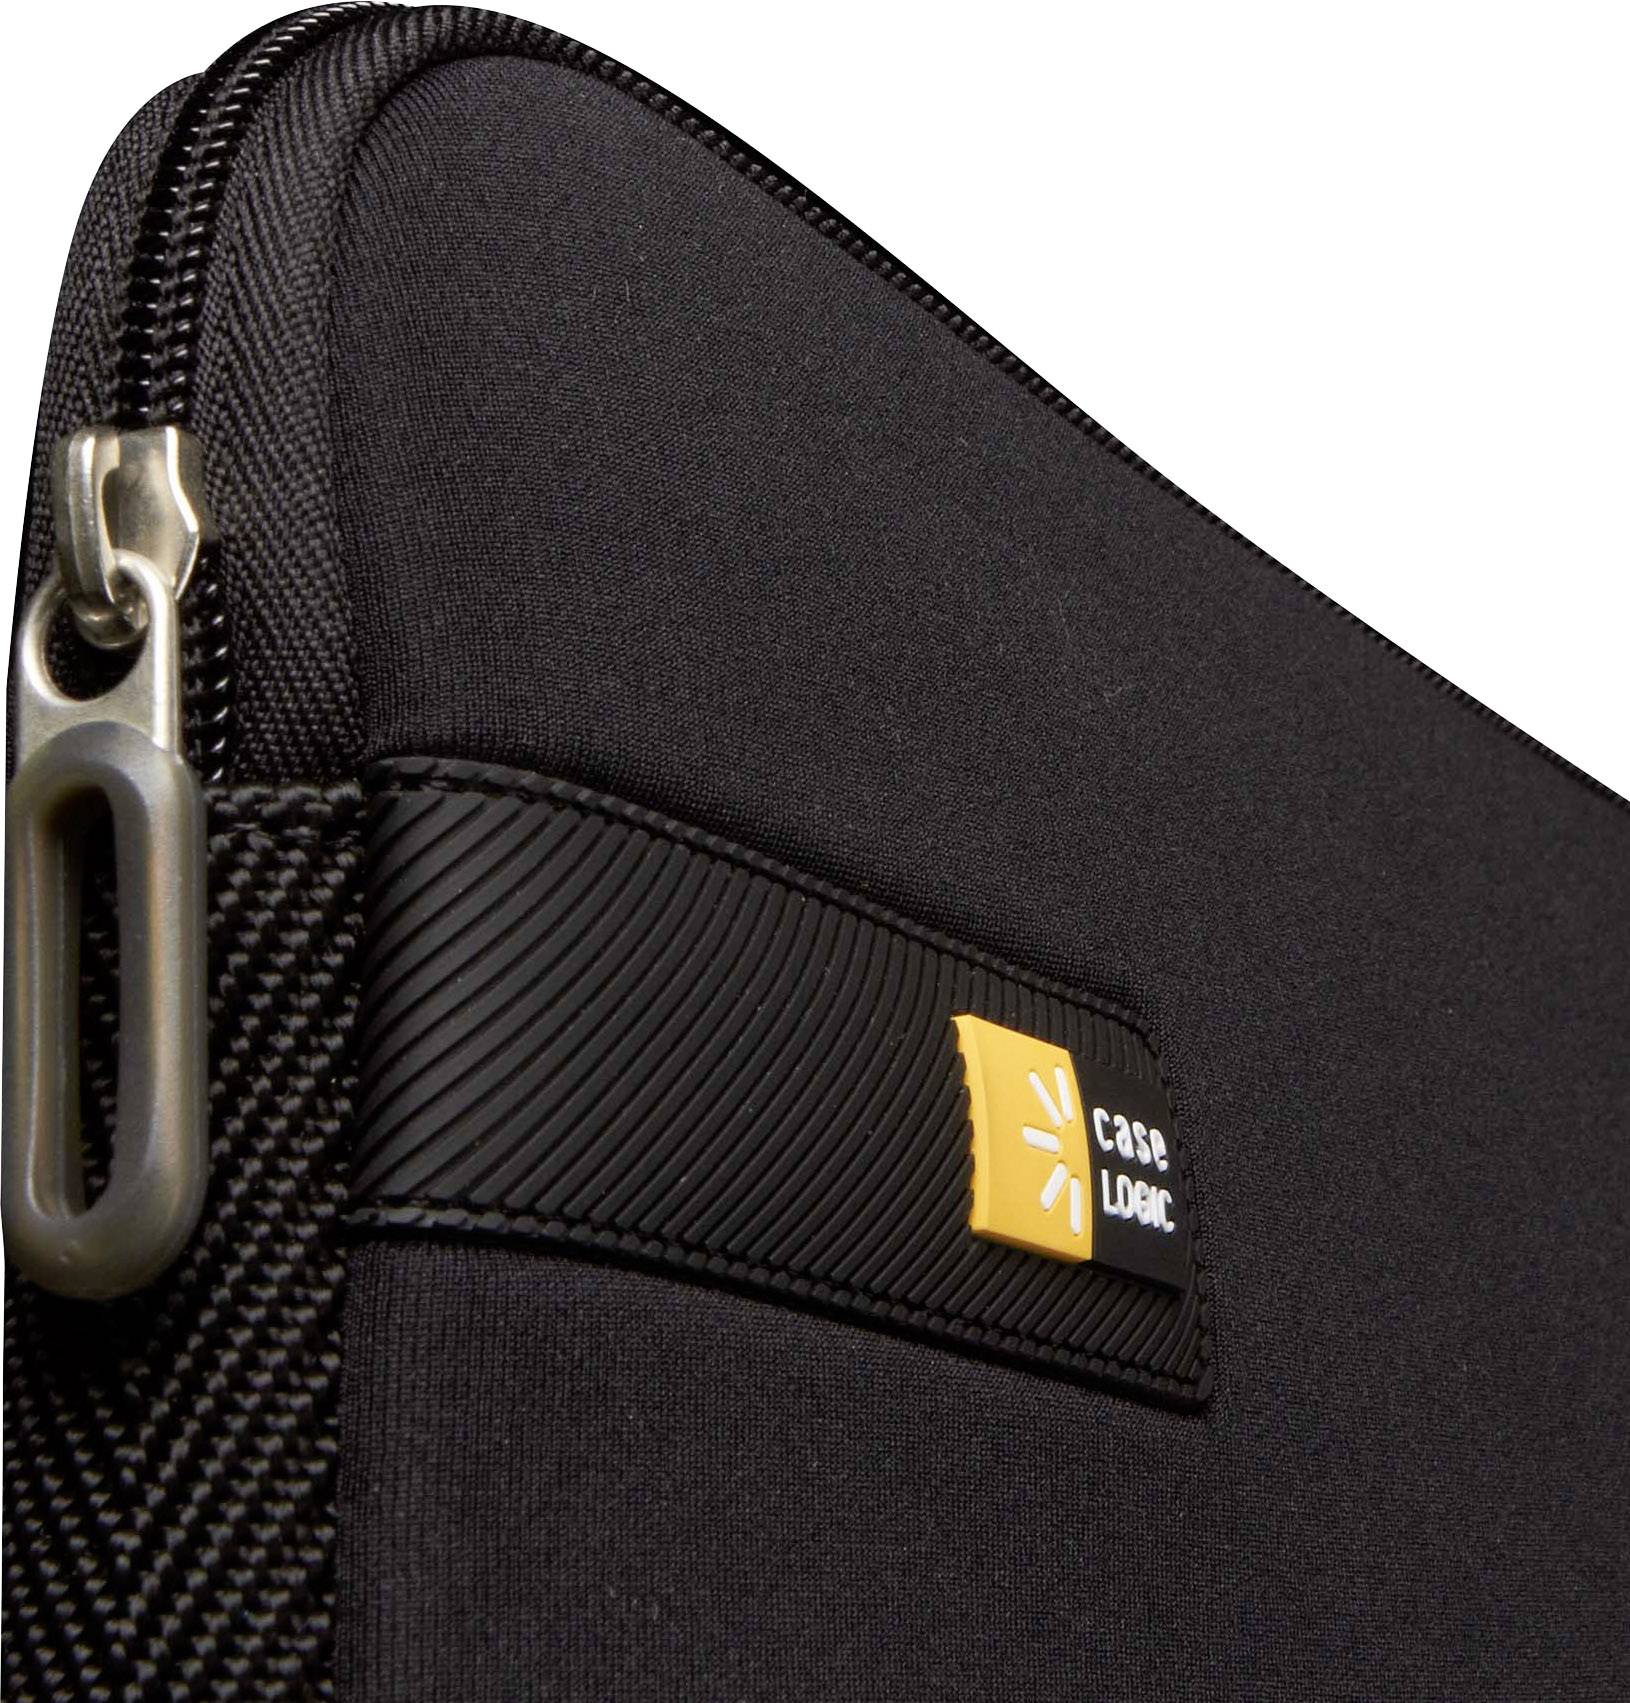 Logic Case Laptop Bag Deals Discounted, Save 64% | jlcatj.gob.mx